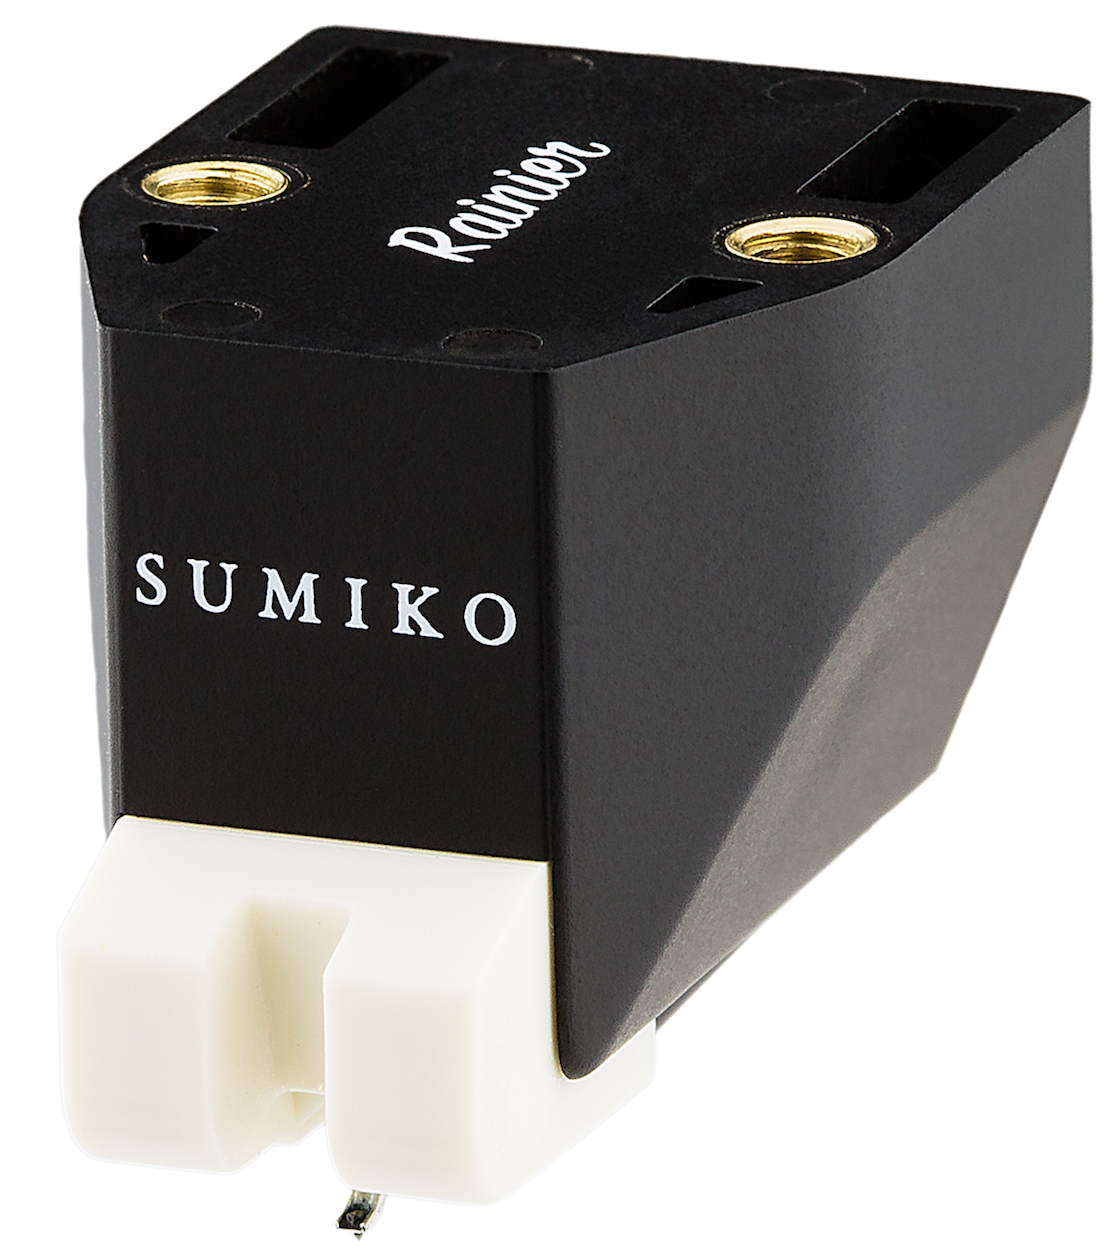 Sumiko Announces 6 New Phono Cartridges